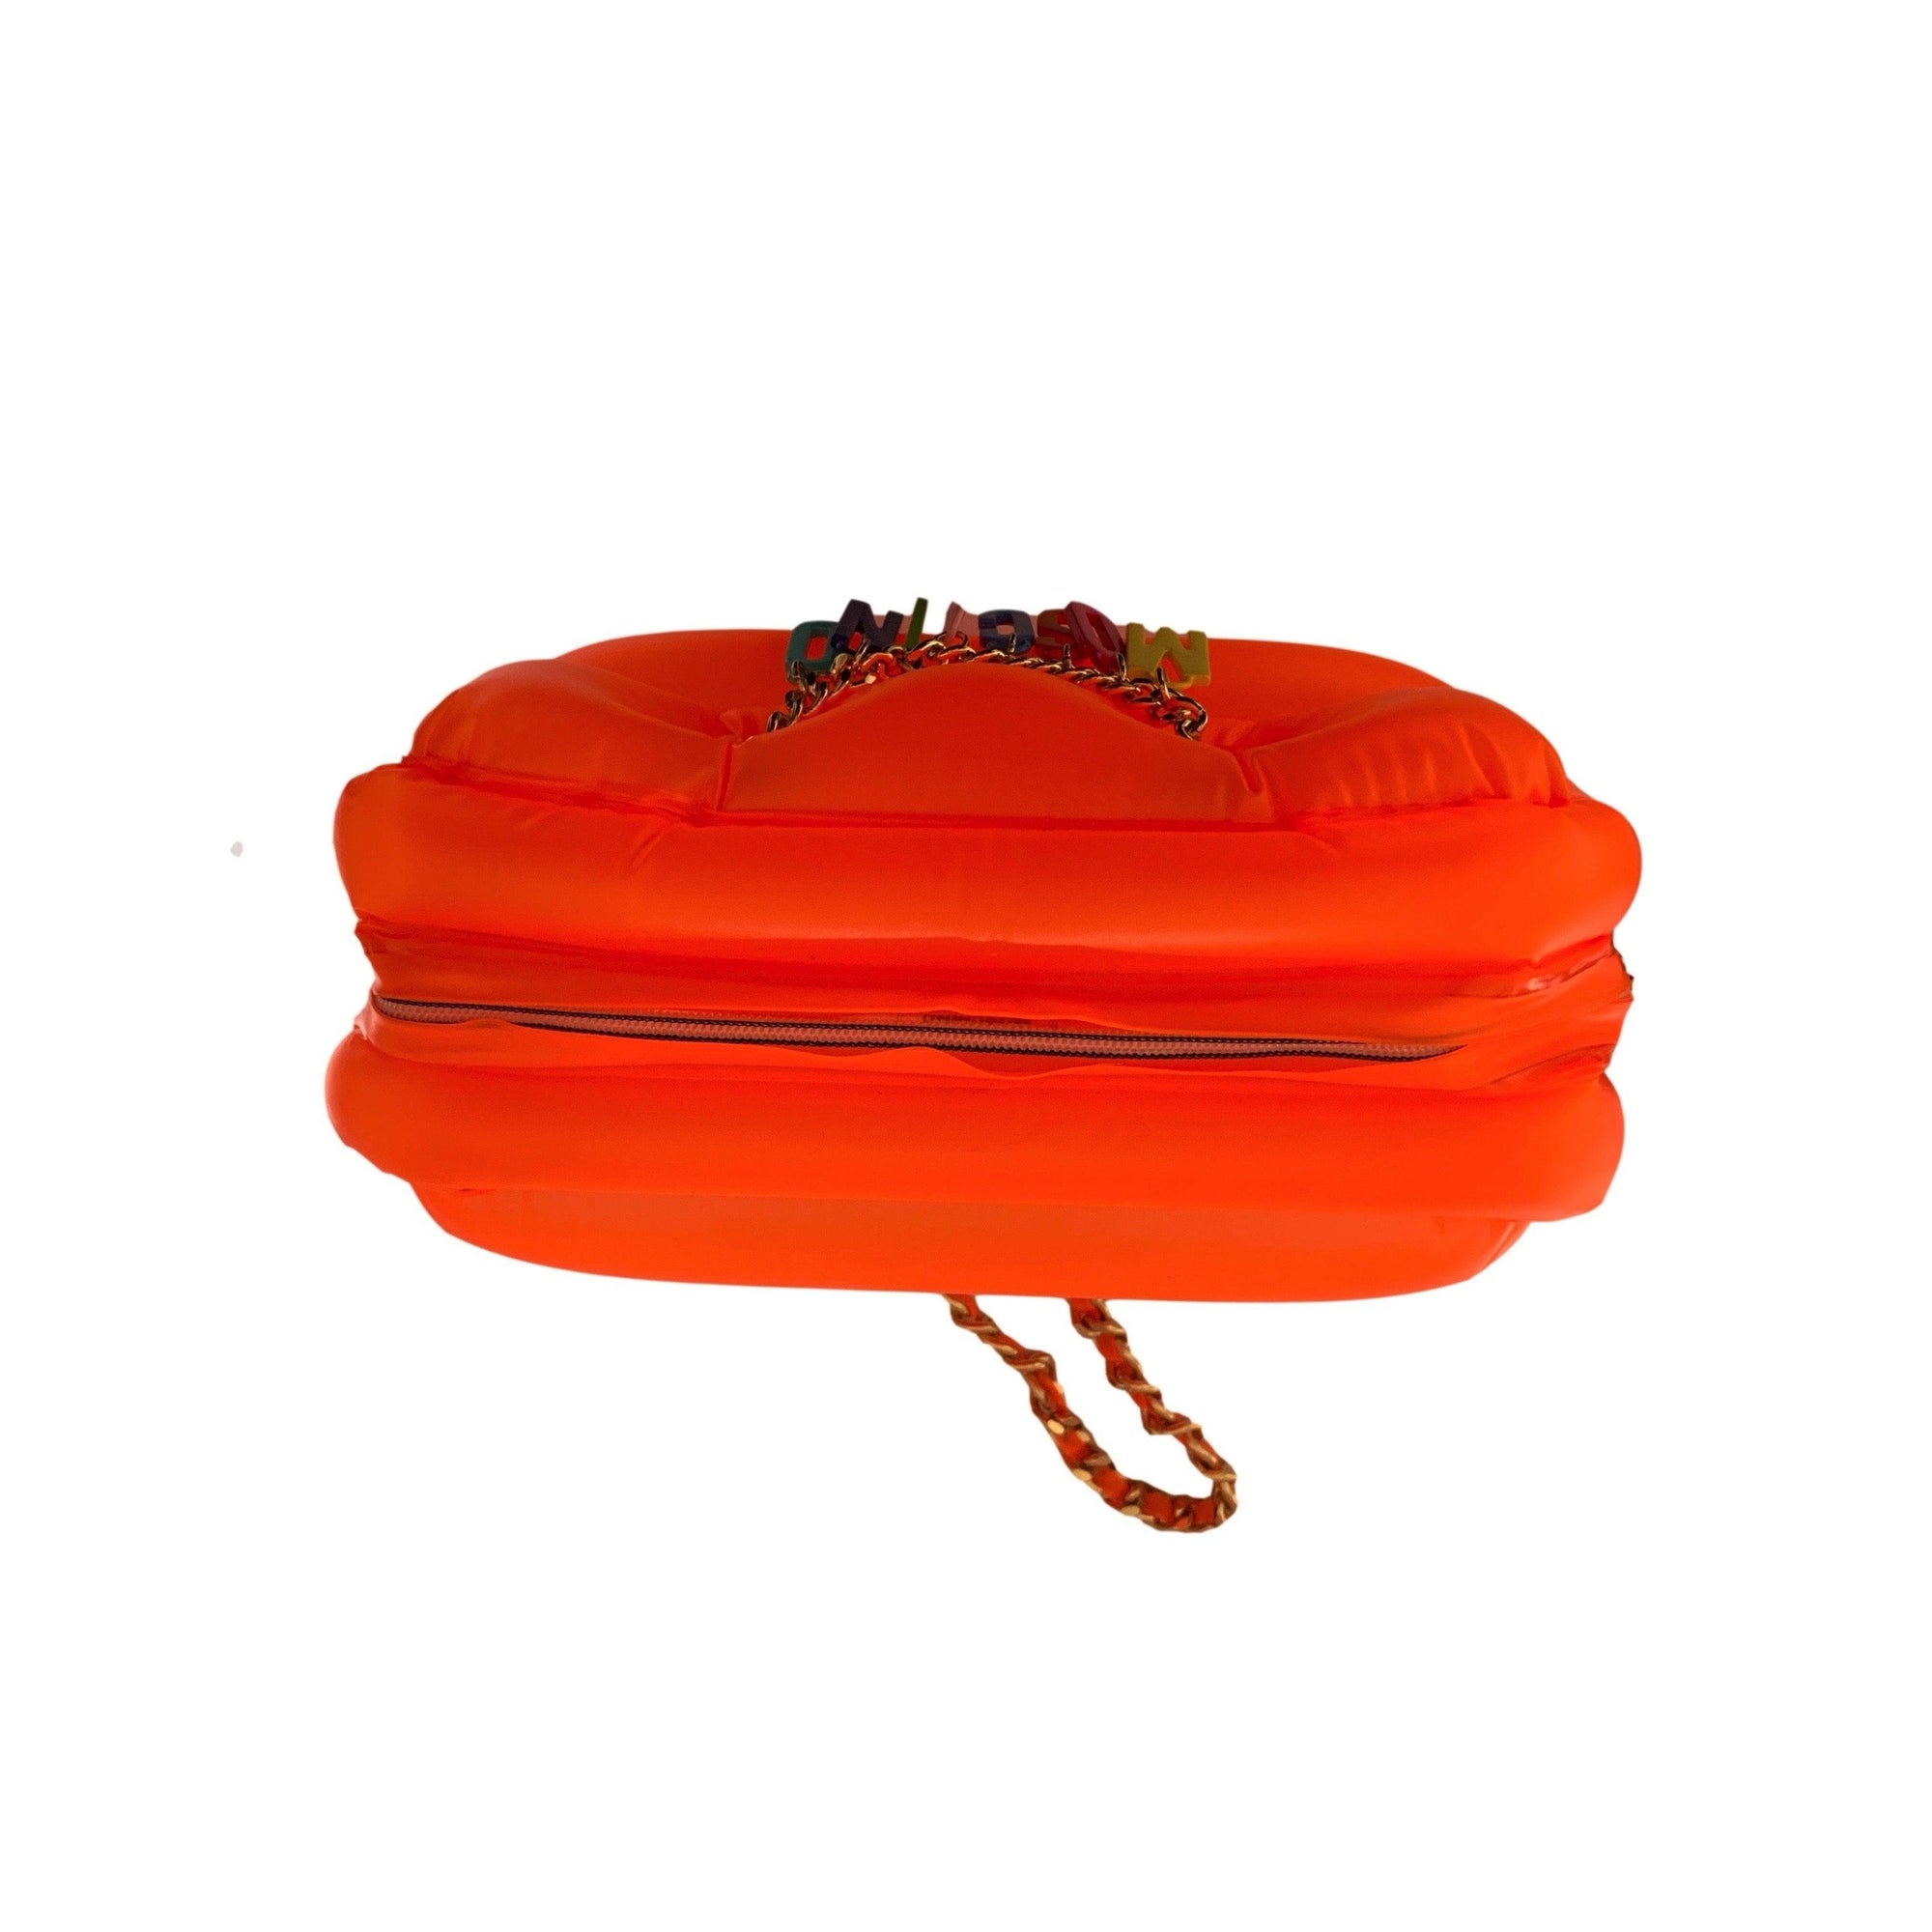 Moschino Orange Inflatable Logo Bag - Handbags